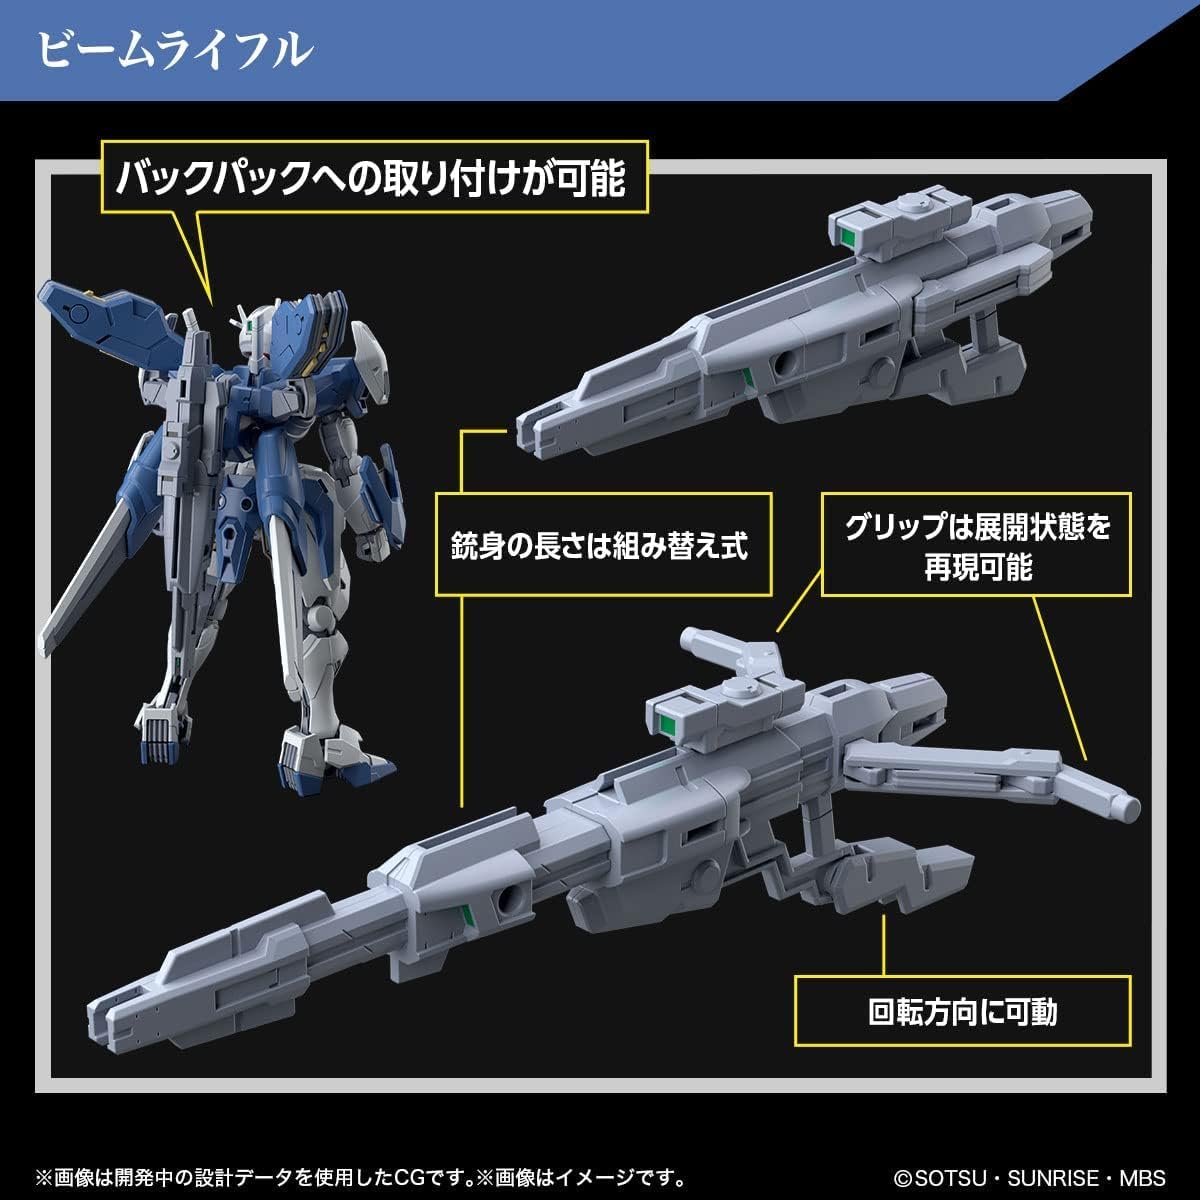 1/144 HG Gundam Aerial Rebuild (Mobile Suit Gundam: The Witch Fr